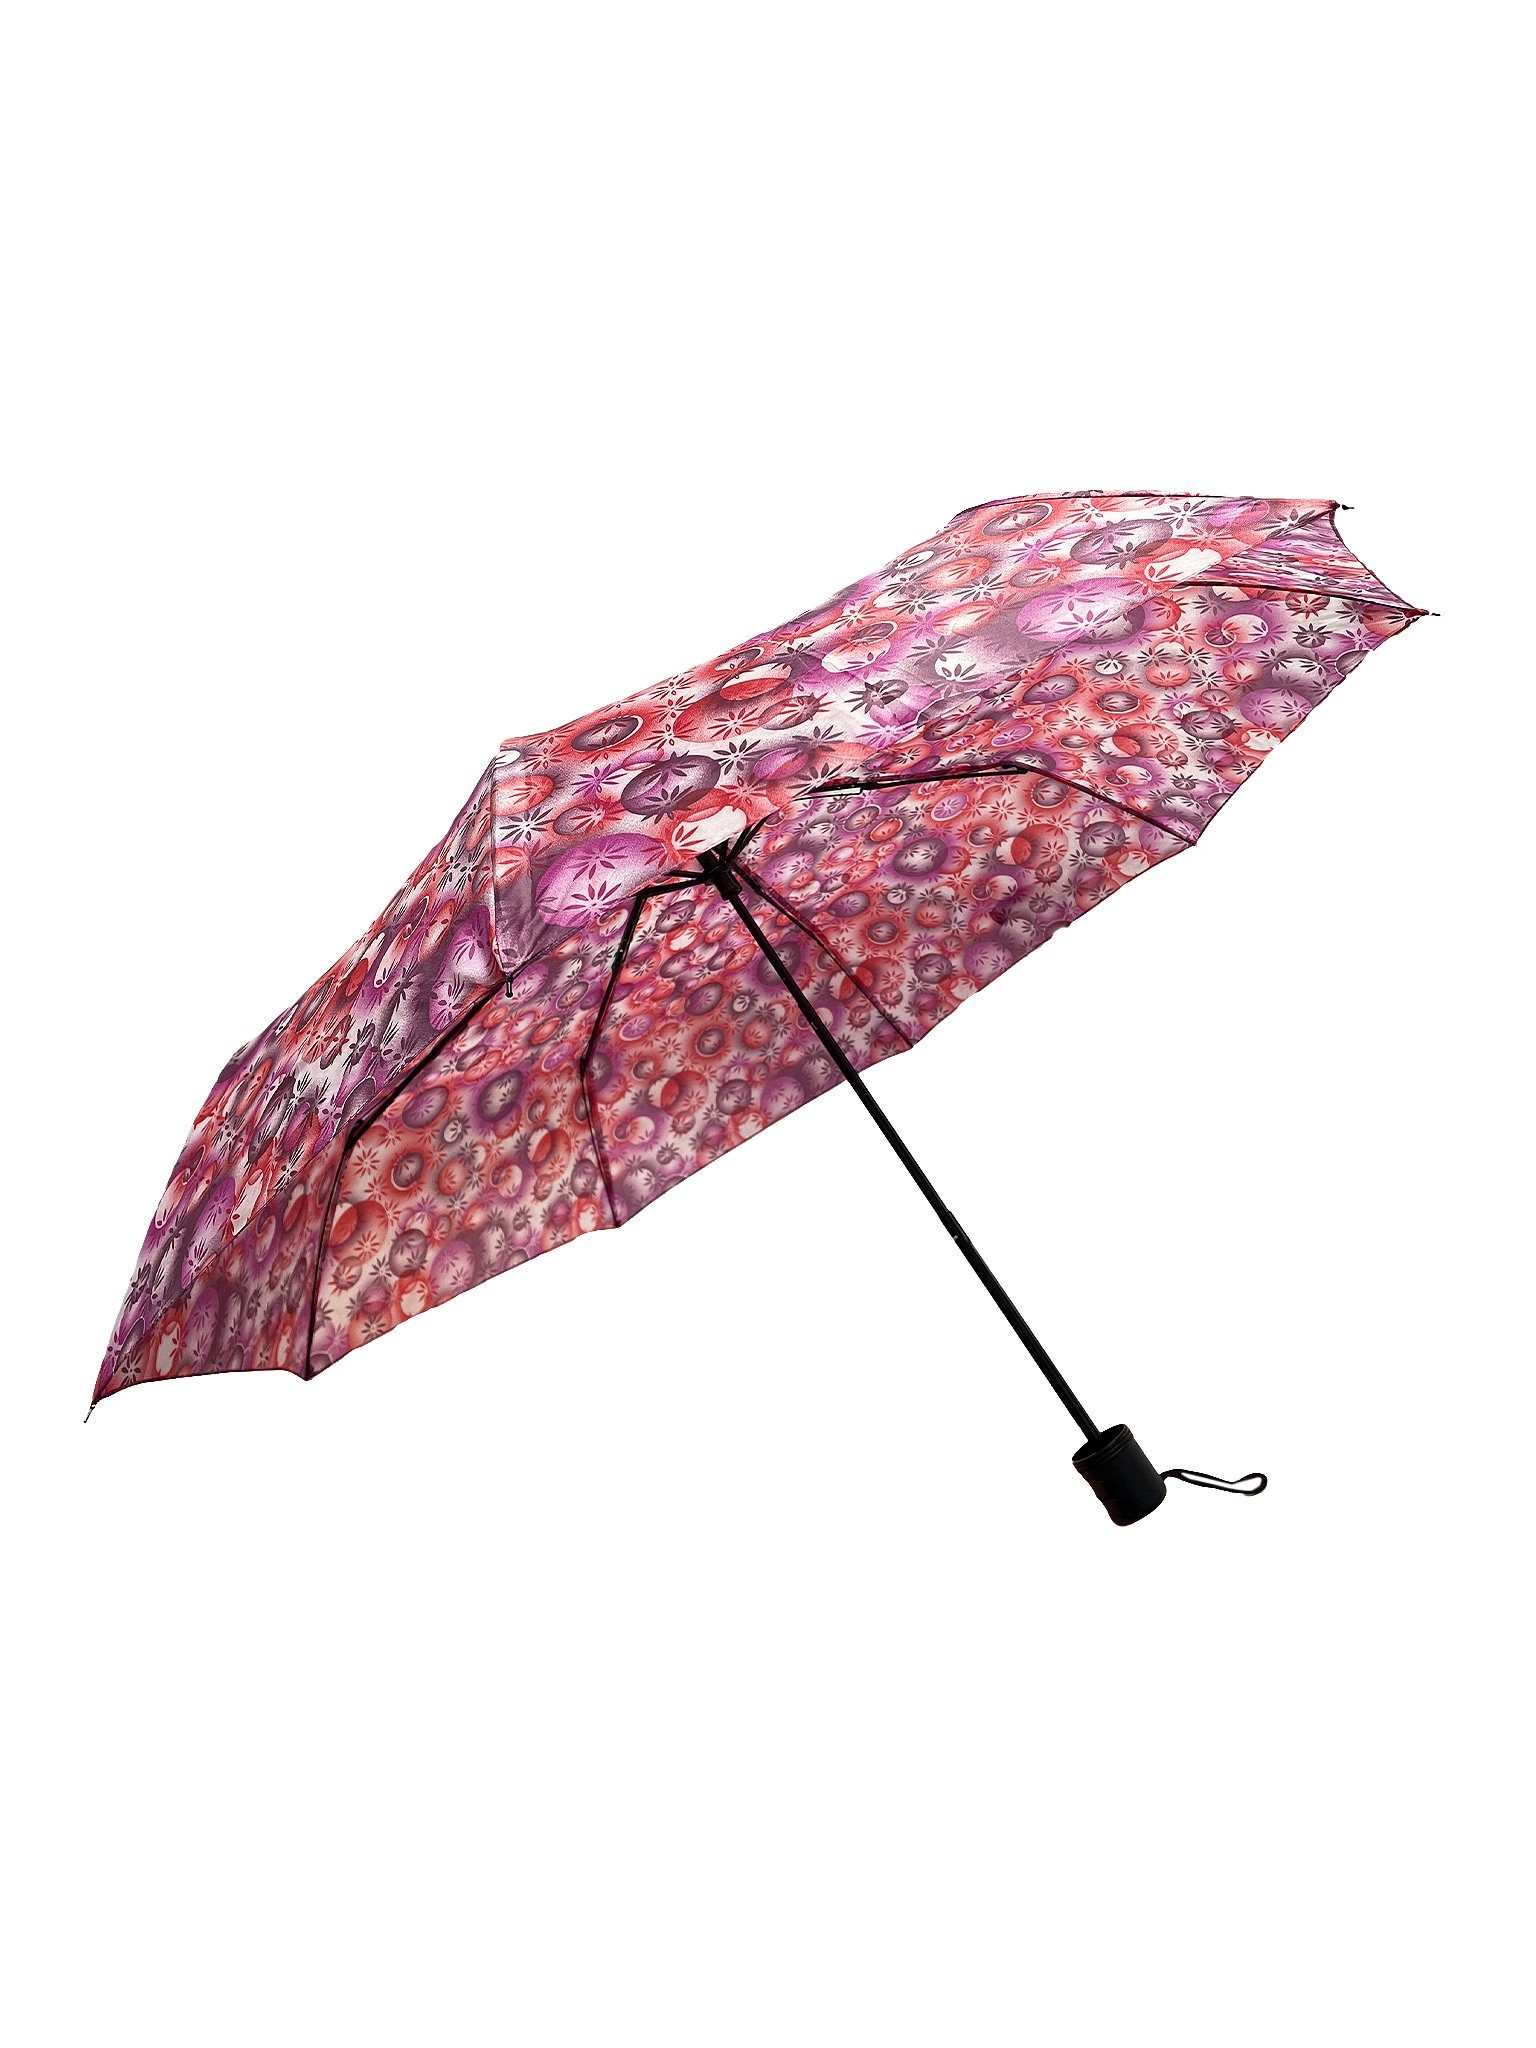 ANELY Taschenregenschirm Kleiner Regenschirm Paris Gemustert Taschenschirm, 6746 in Rosa